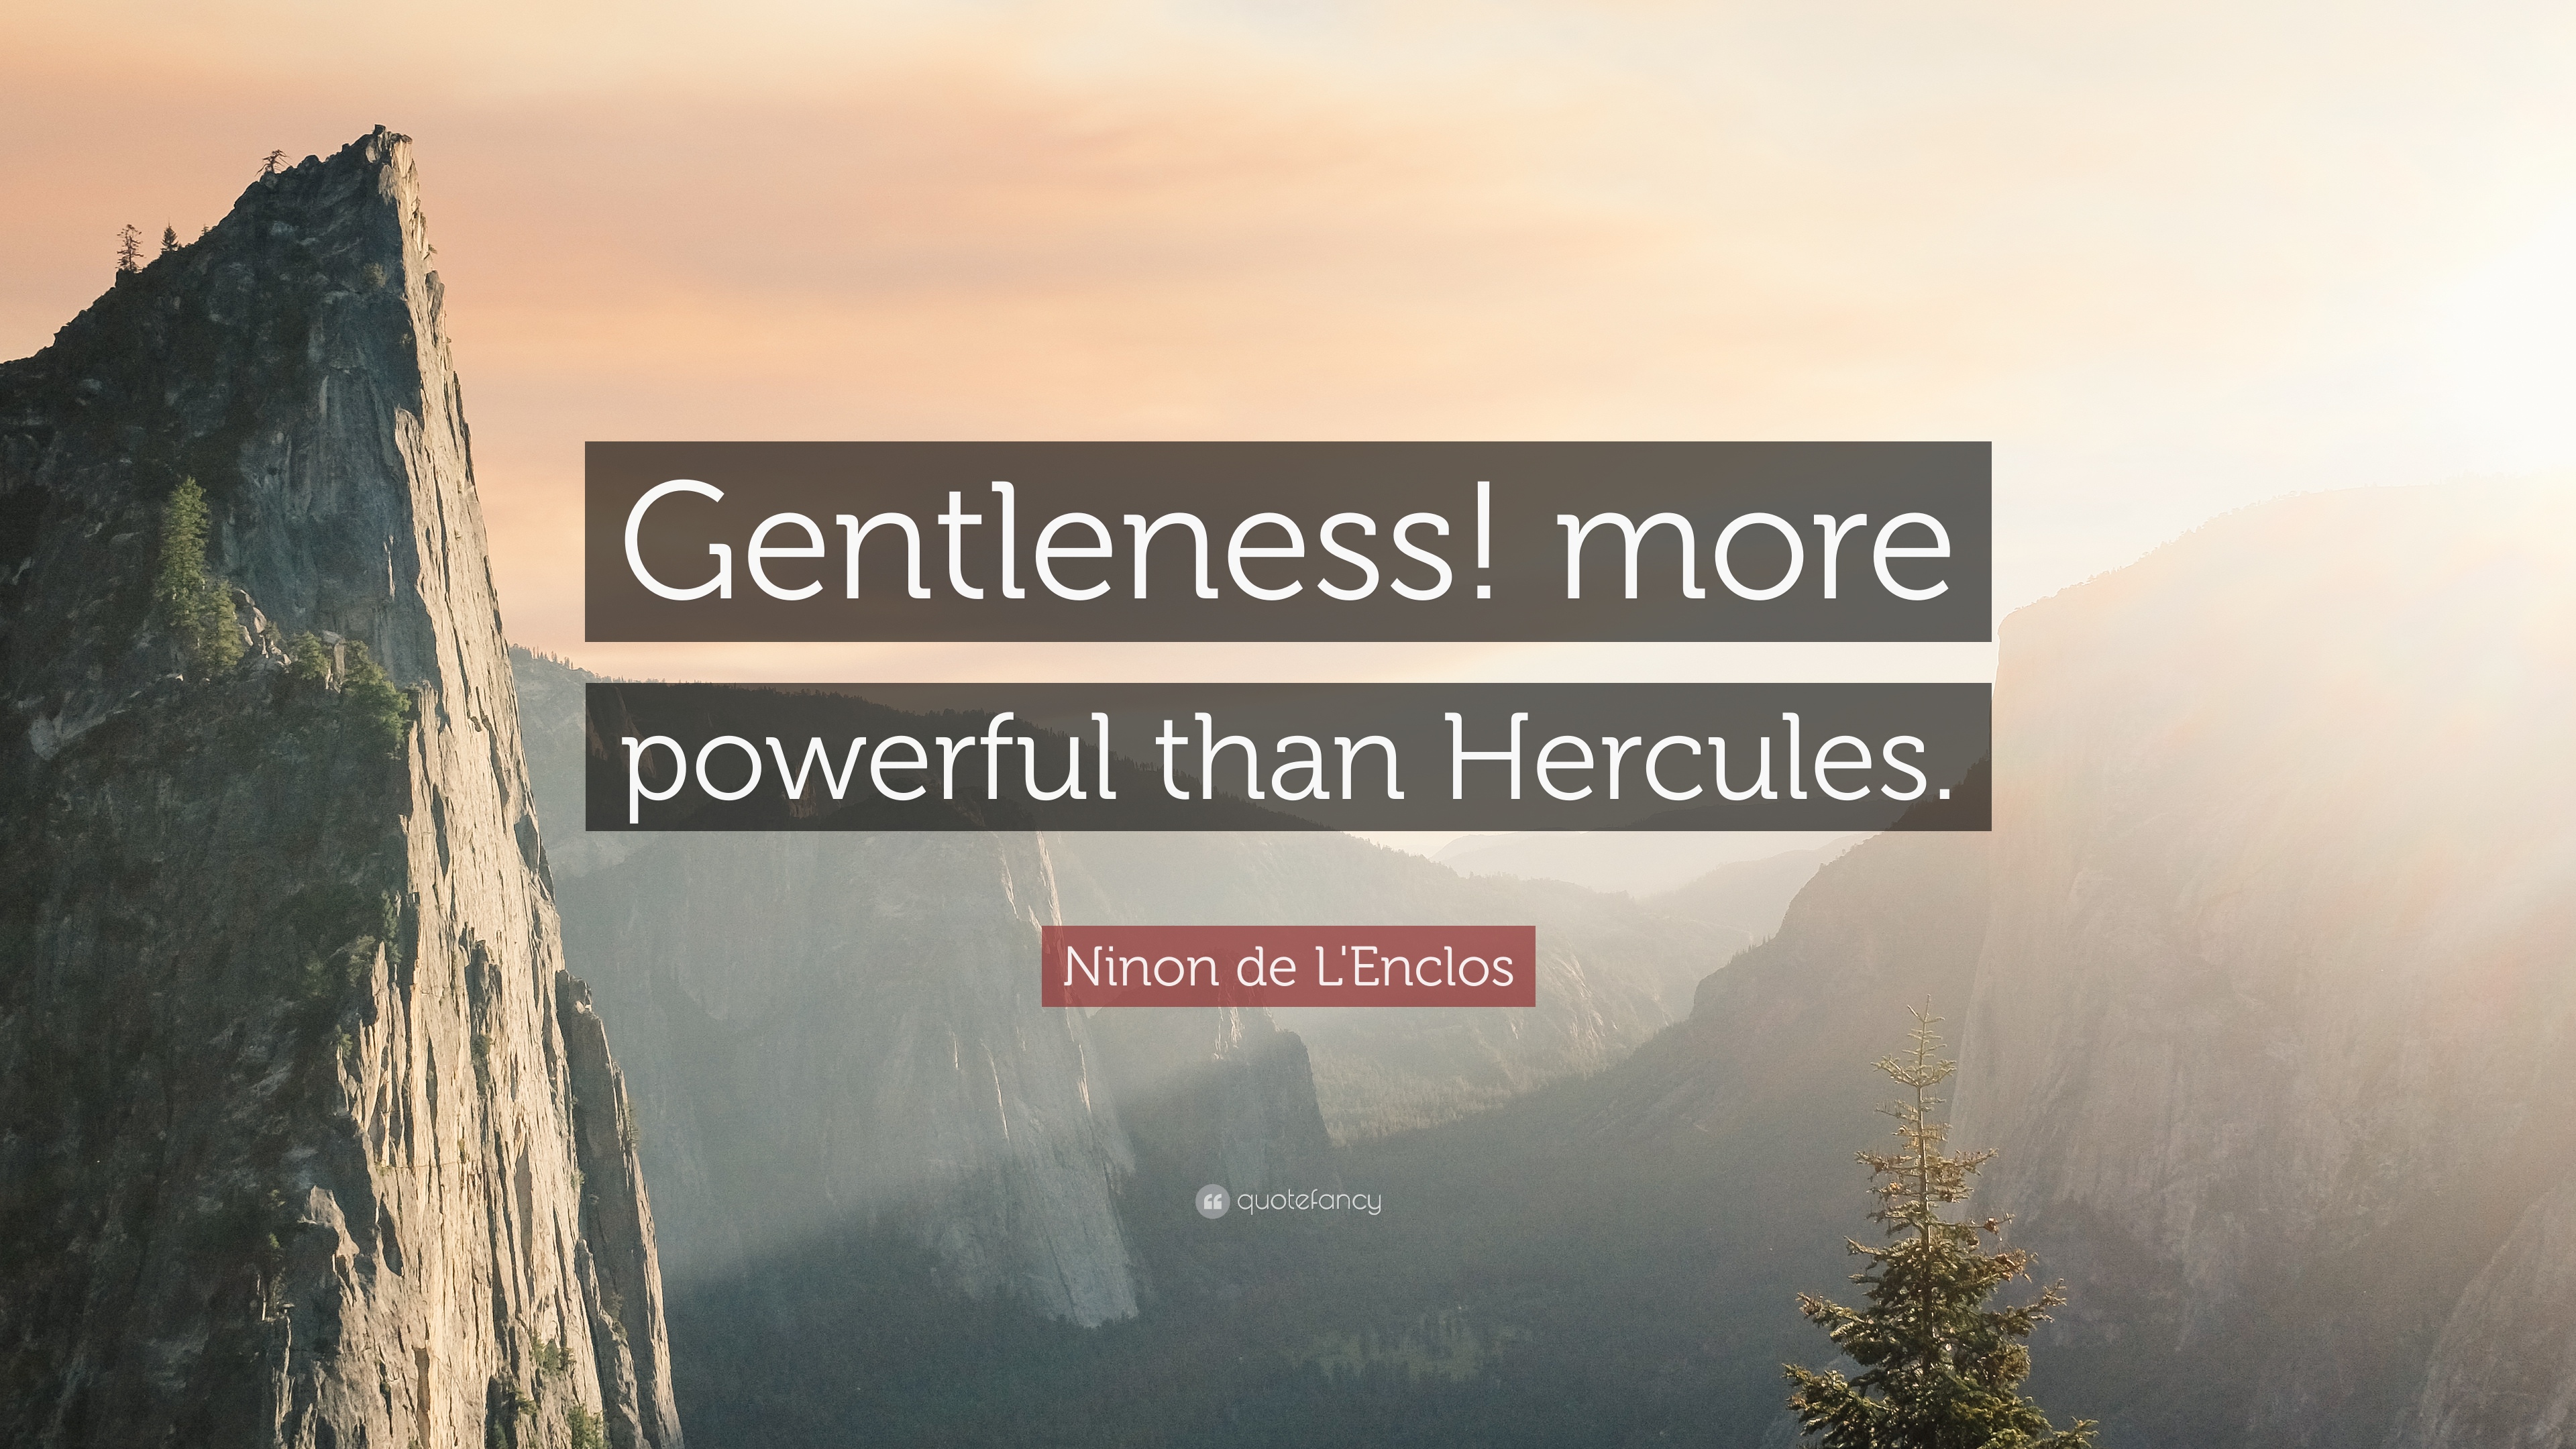 Ninon de L'Enclos Quote: “Gentleness! more powerful than Hercules ...